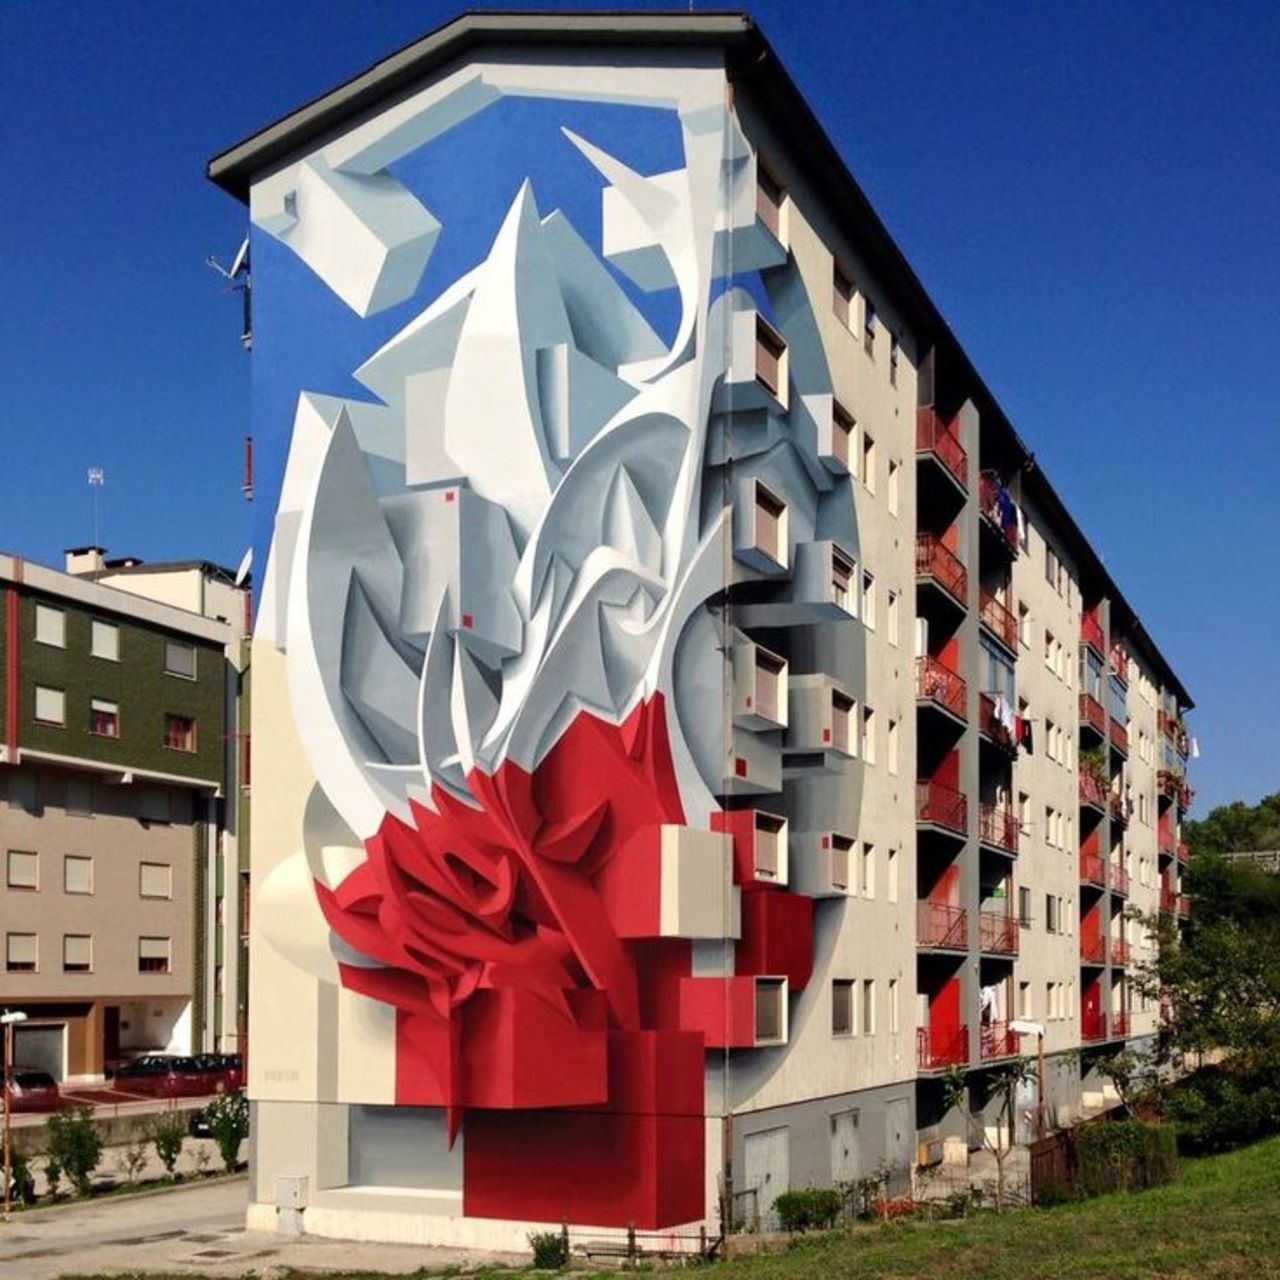 Work by peeta, Campobasso Italy#streetart #mural #graffiti #art https://t.co/eplV8lEj6f